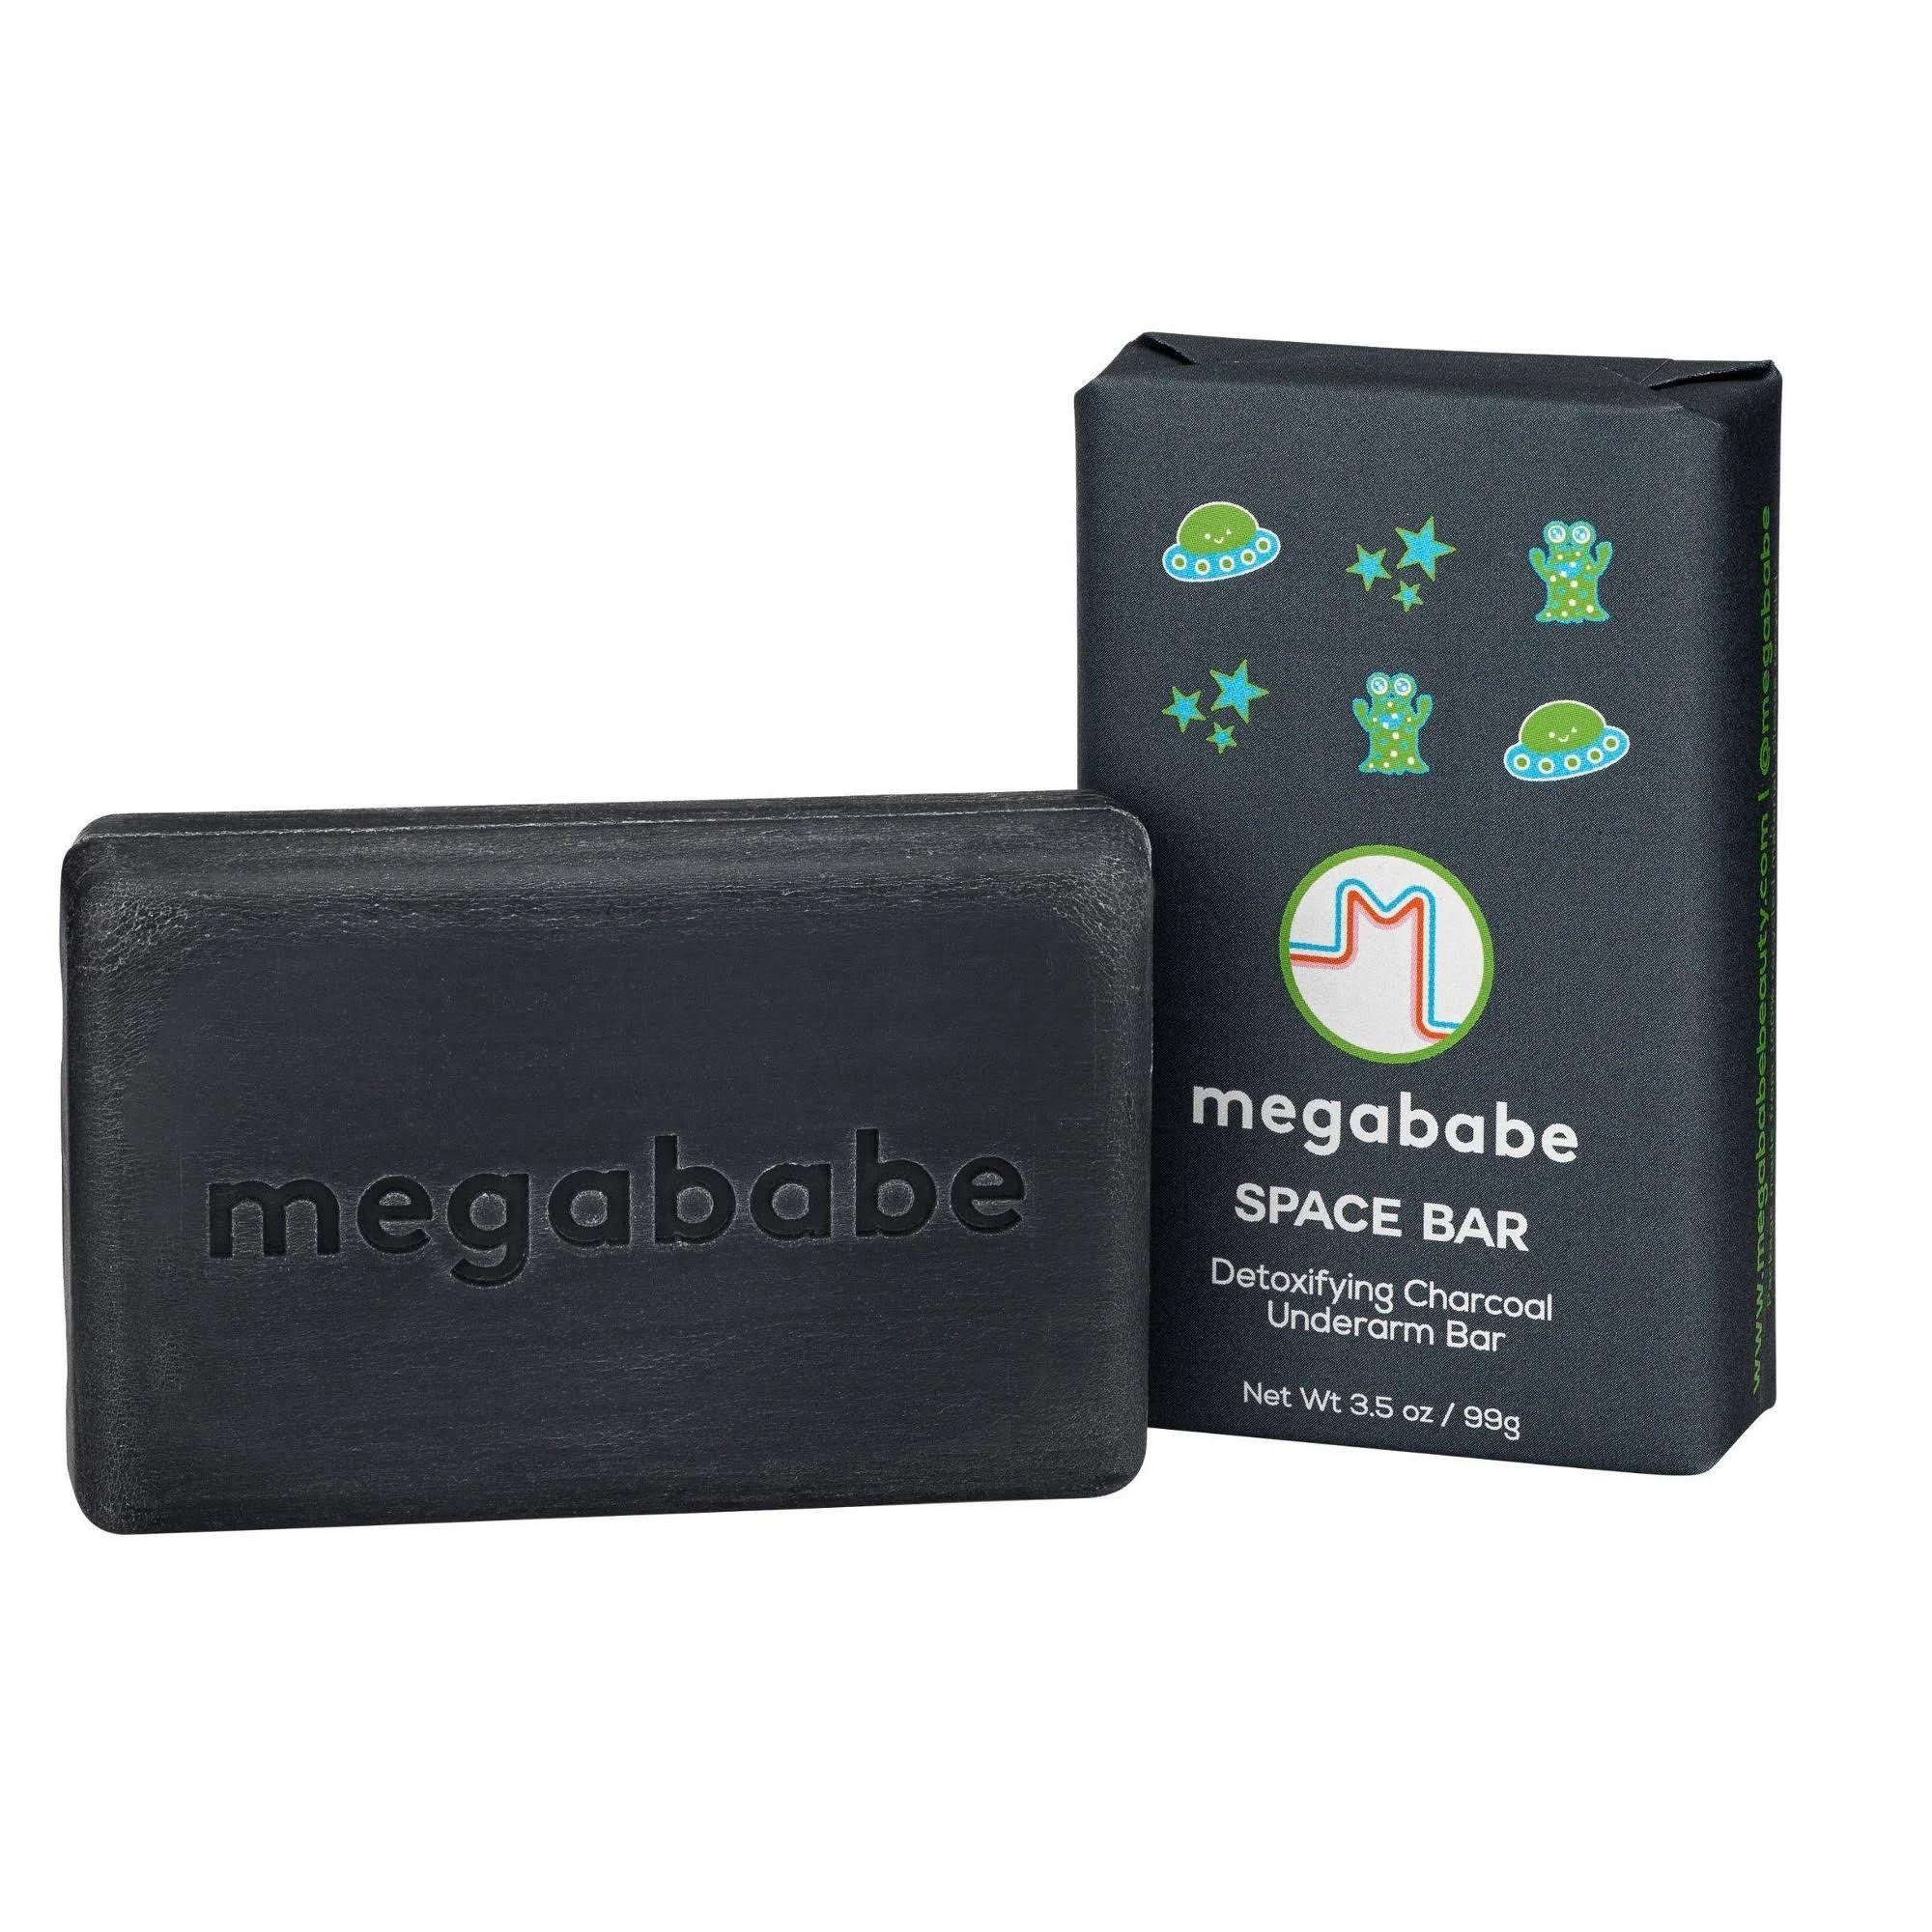 Megababe Space Bar Detoxifying Charcoal Underarm Bar Mini